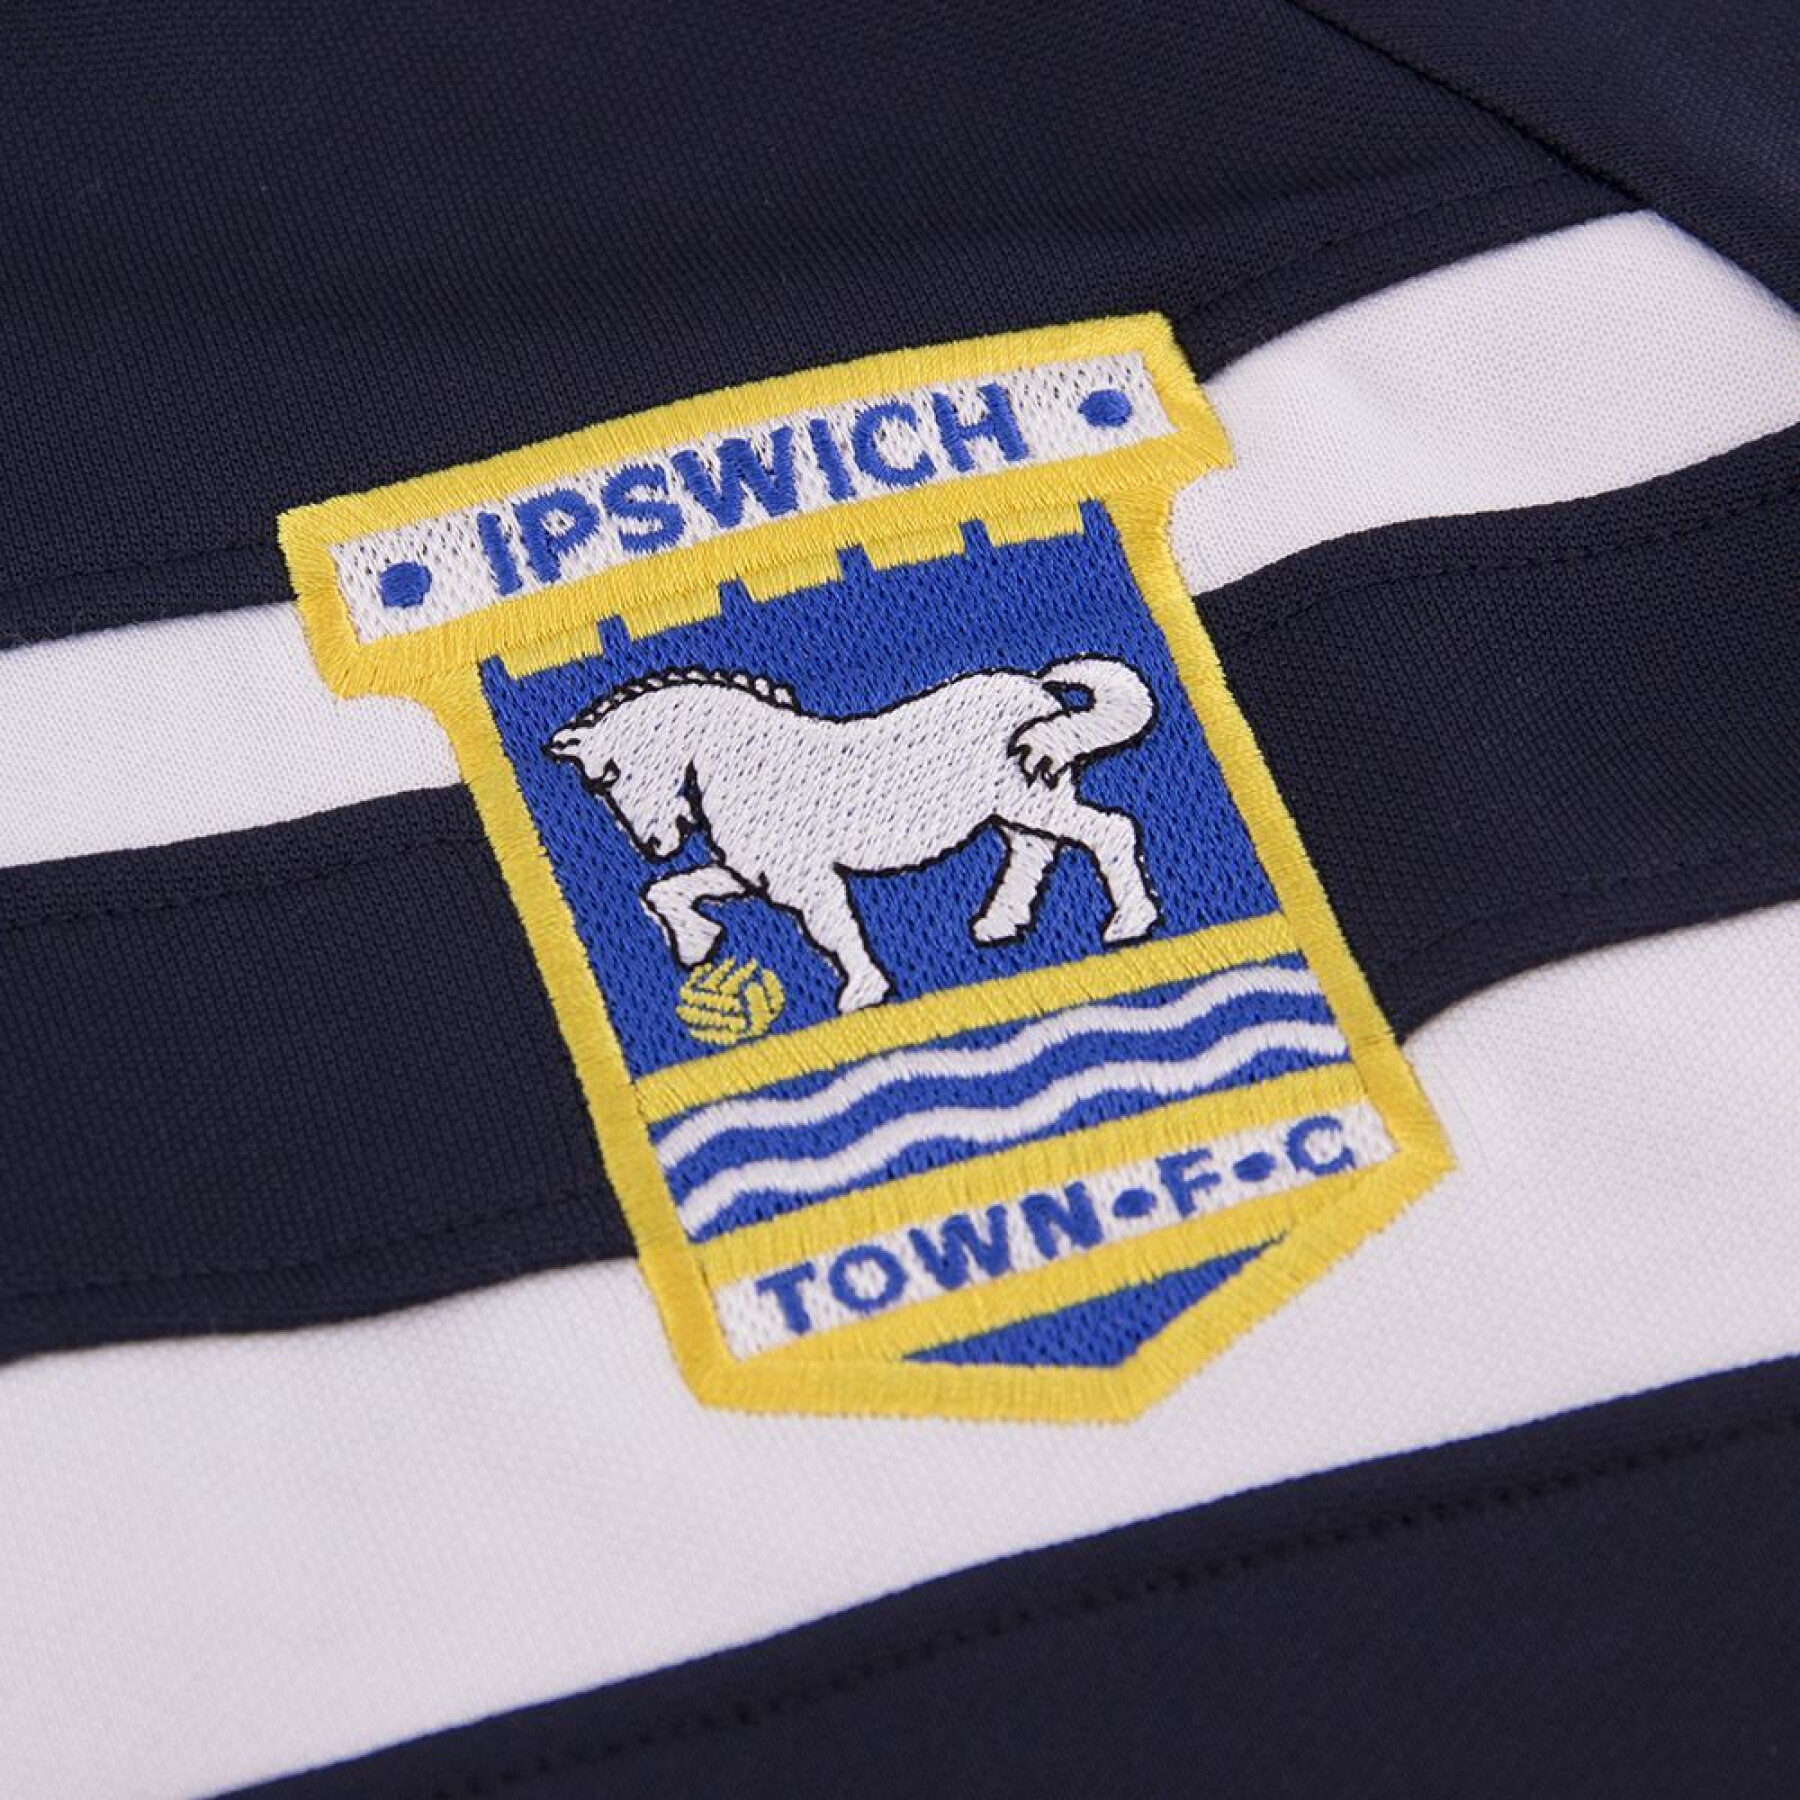 Retro trainingsjack Ipswich Town FC 1985/86